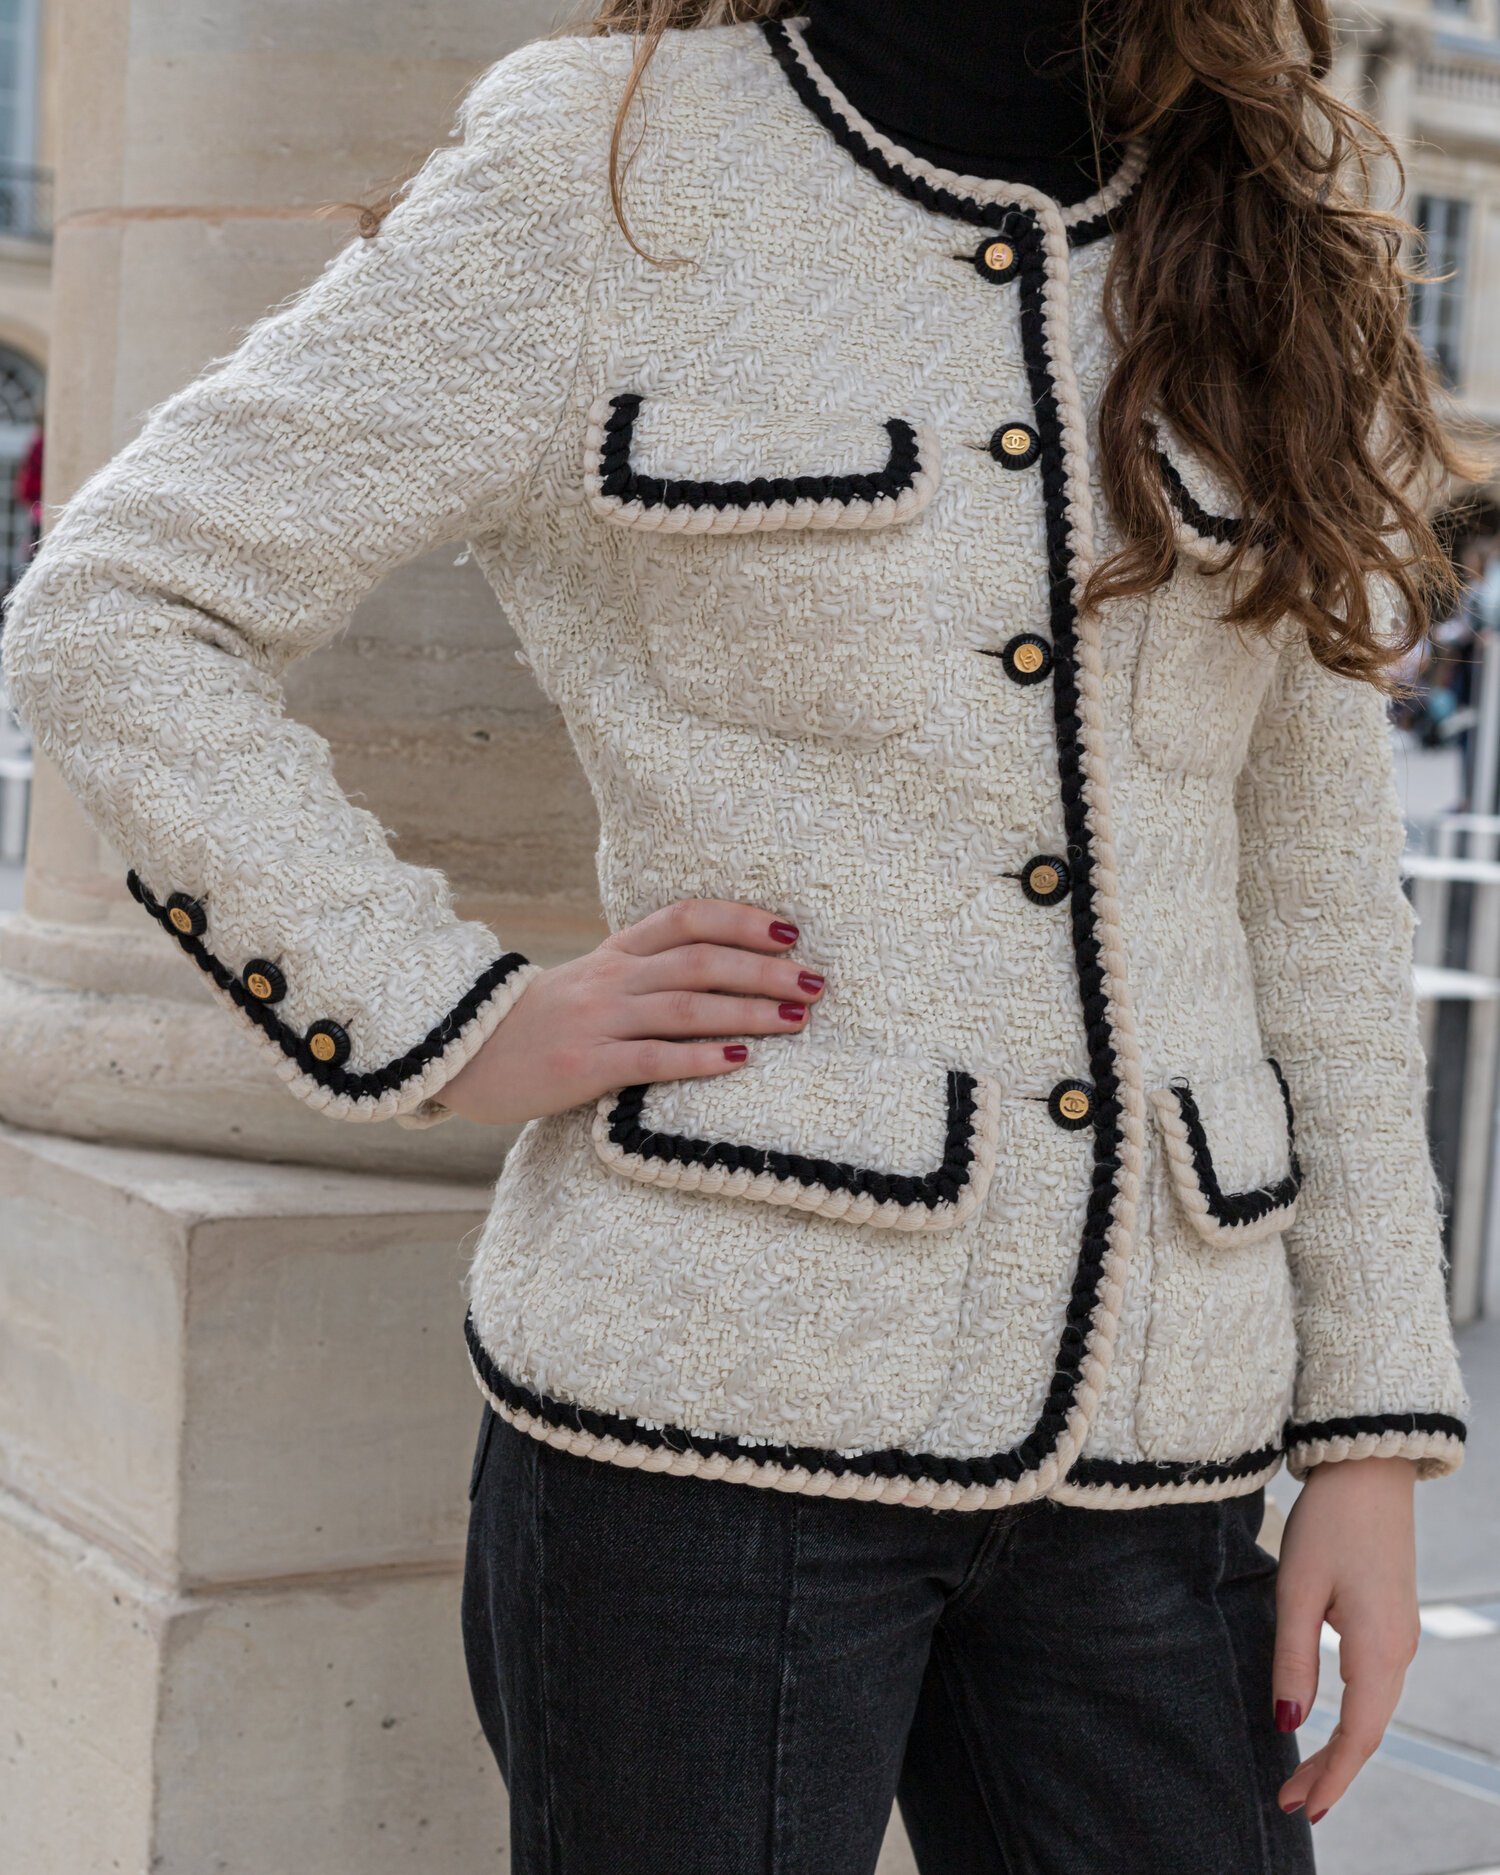 Dolce & Gabbana 'Special Edition' Tweed Blazer with Sequins Fur Trim -  Dolce & Gabbana